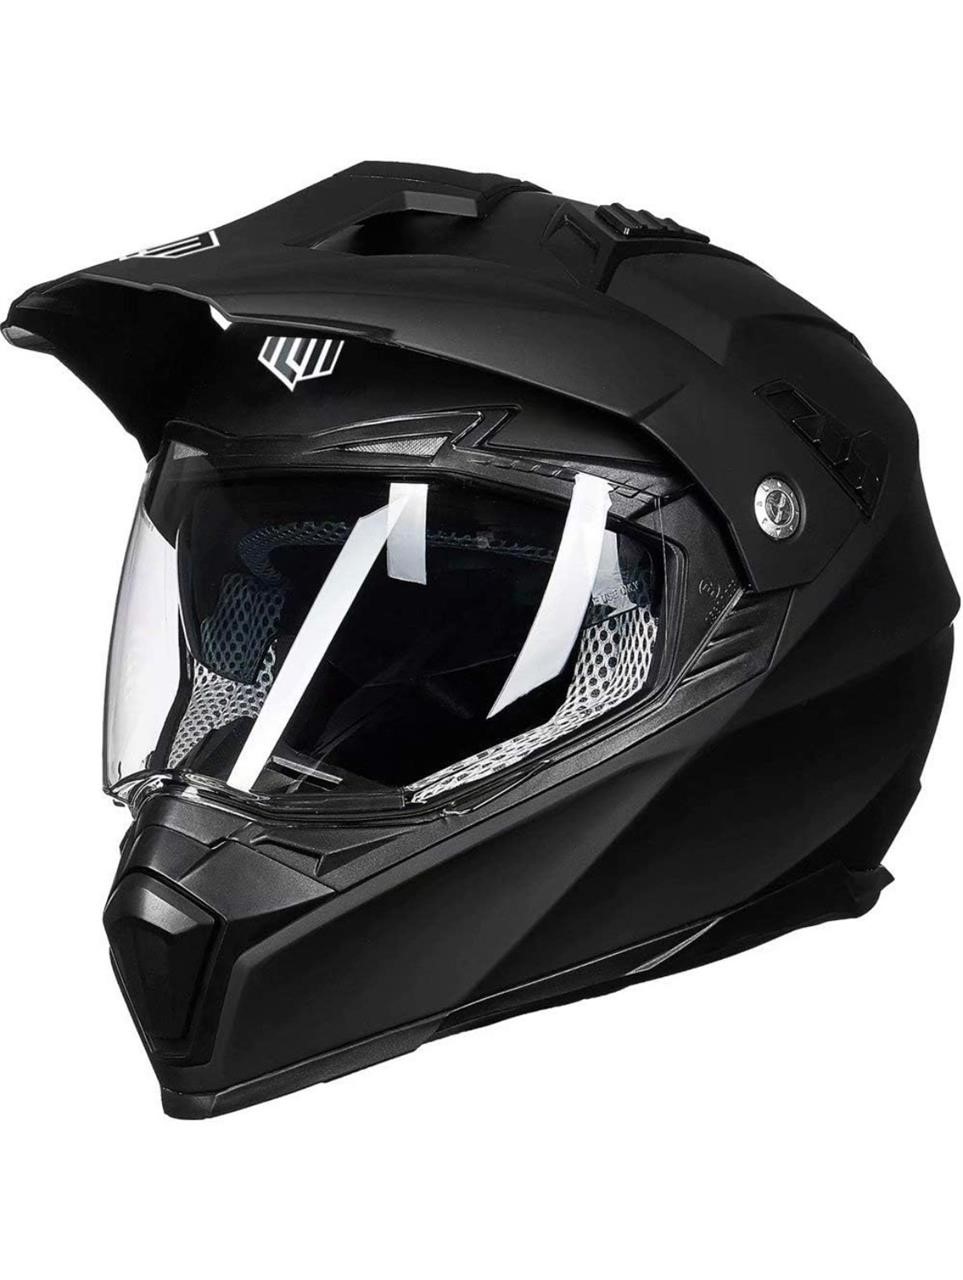 NEW $180 (XL) Motorcycle Full Face Helmet